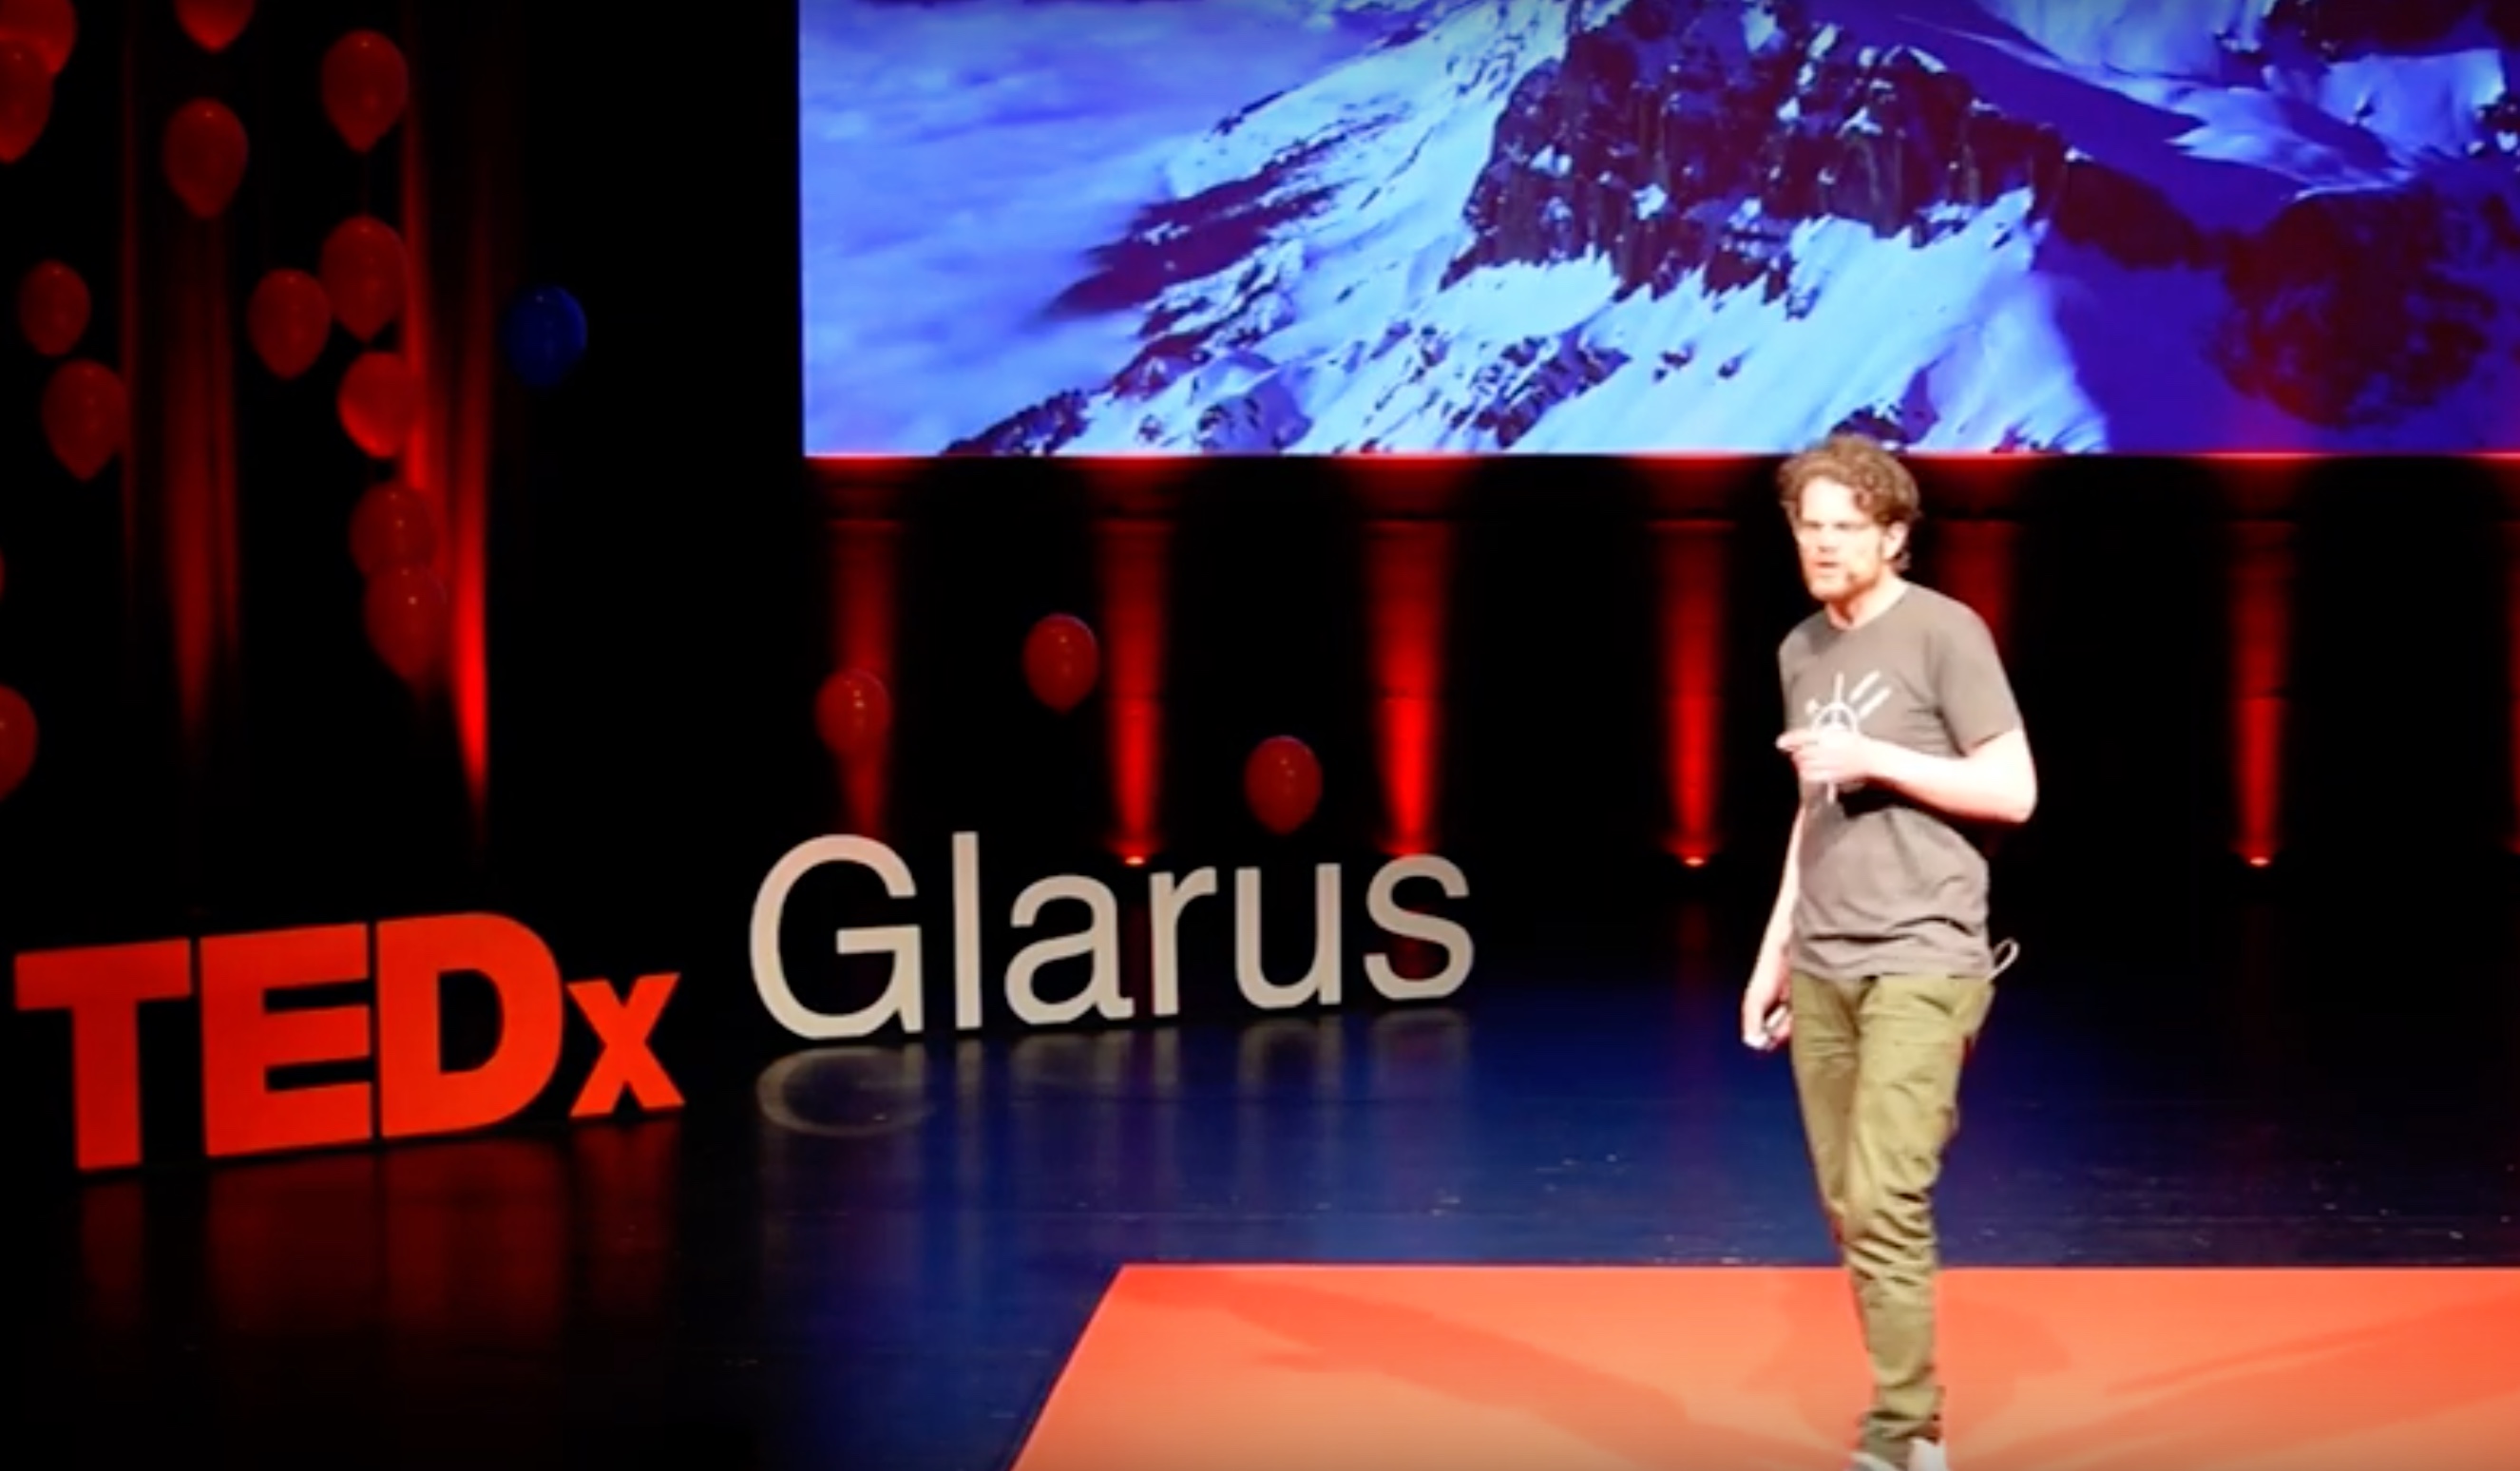 Former Pro Snowboarder Delivers TED Talk On Tackling Climate Change